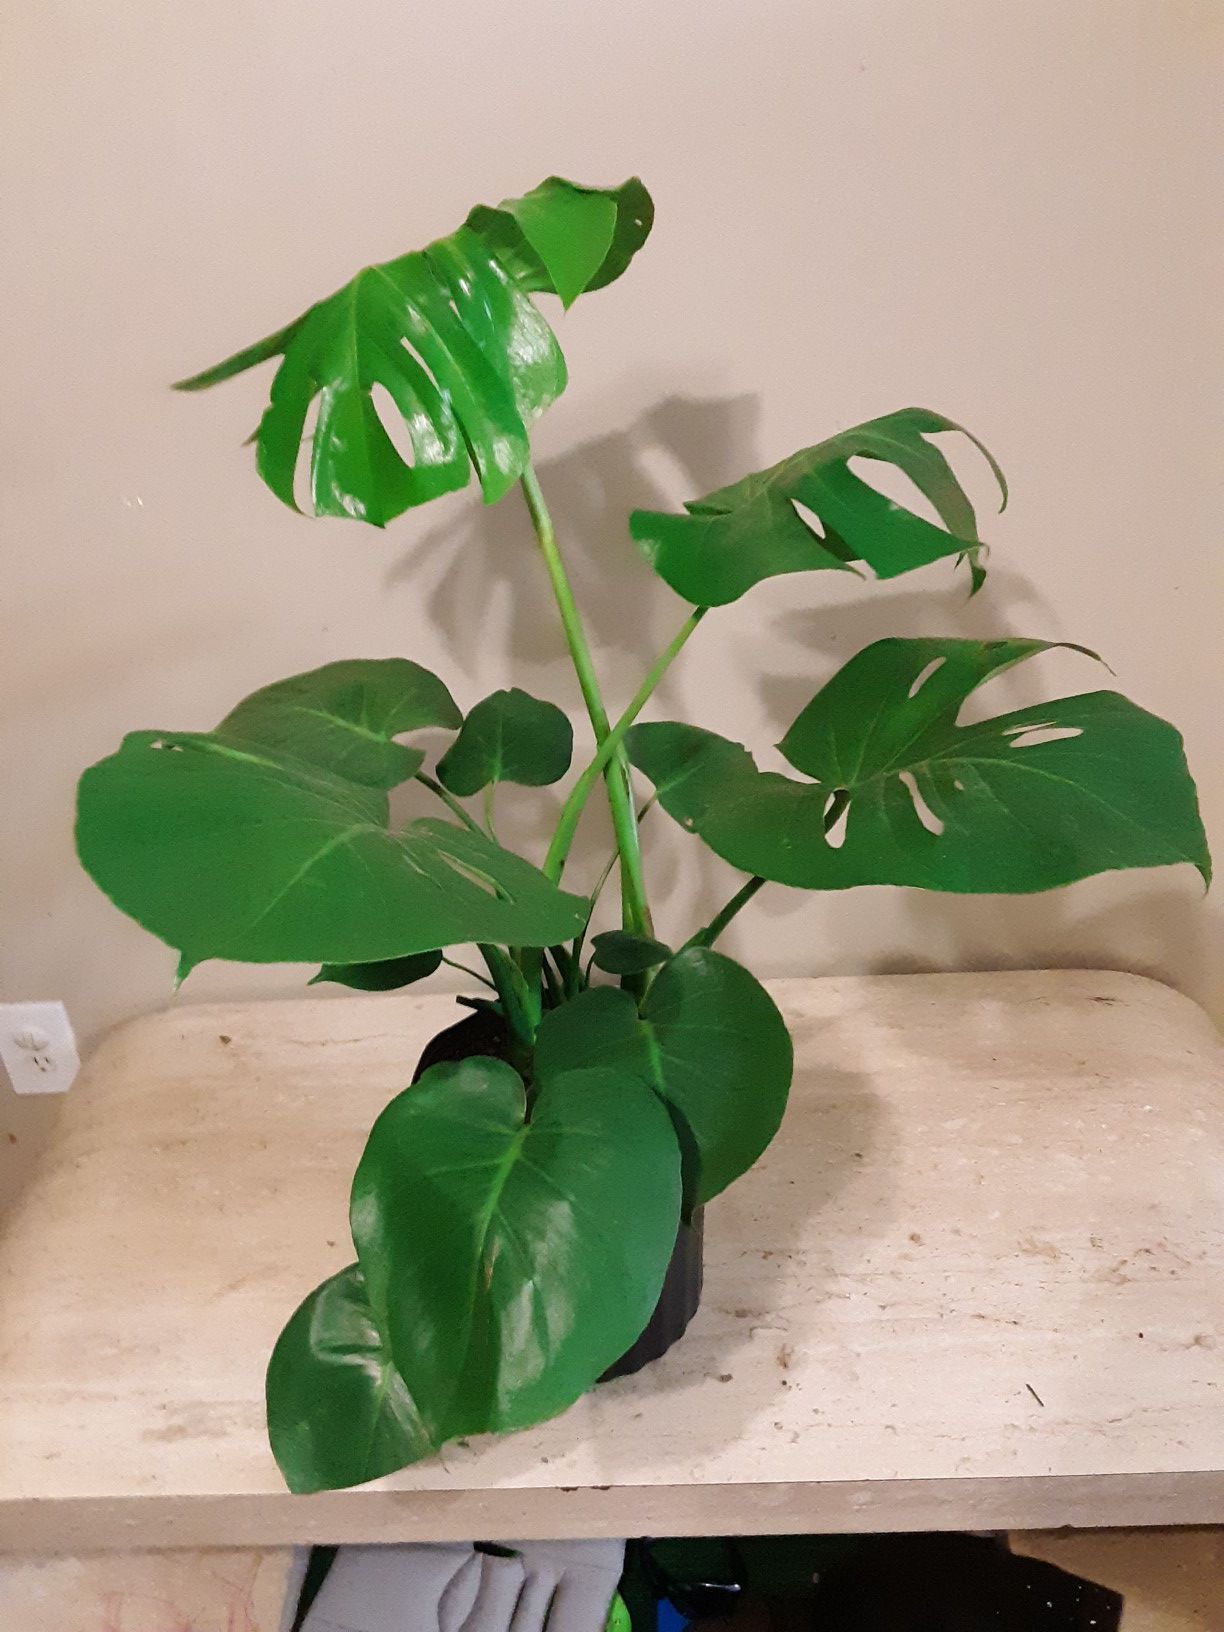 Monstera deliciosa split leaf plants 3 gallons pot 2.5 feet tall